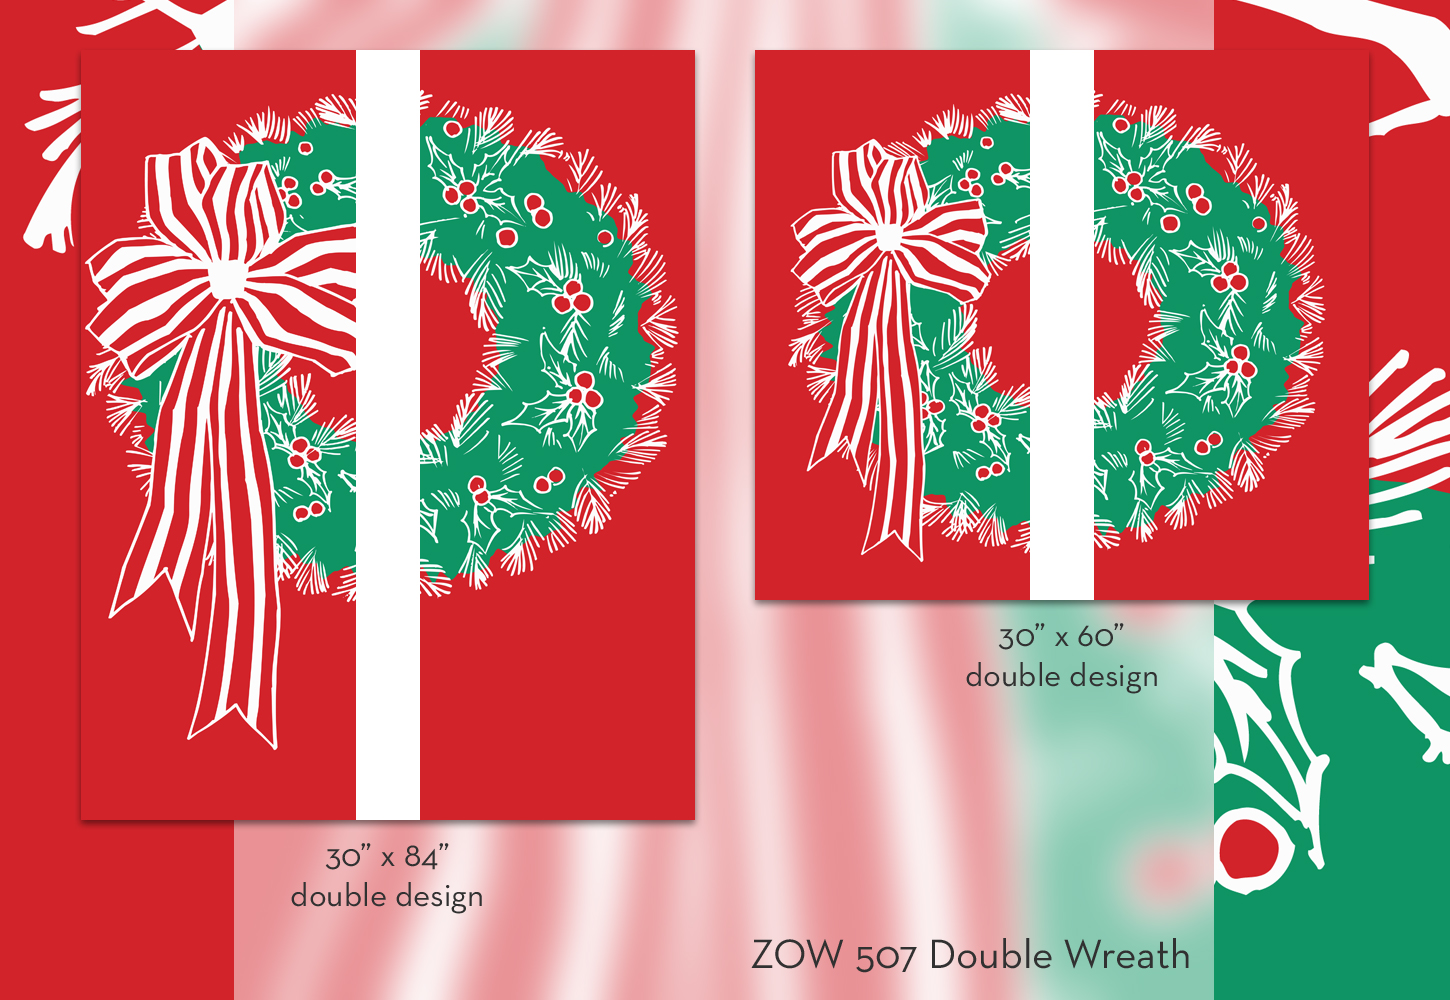 ZOW 507 Double Wreath